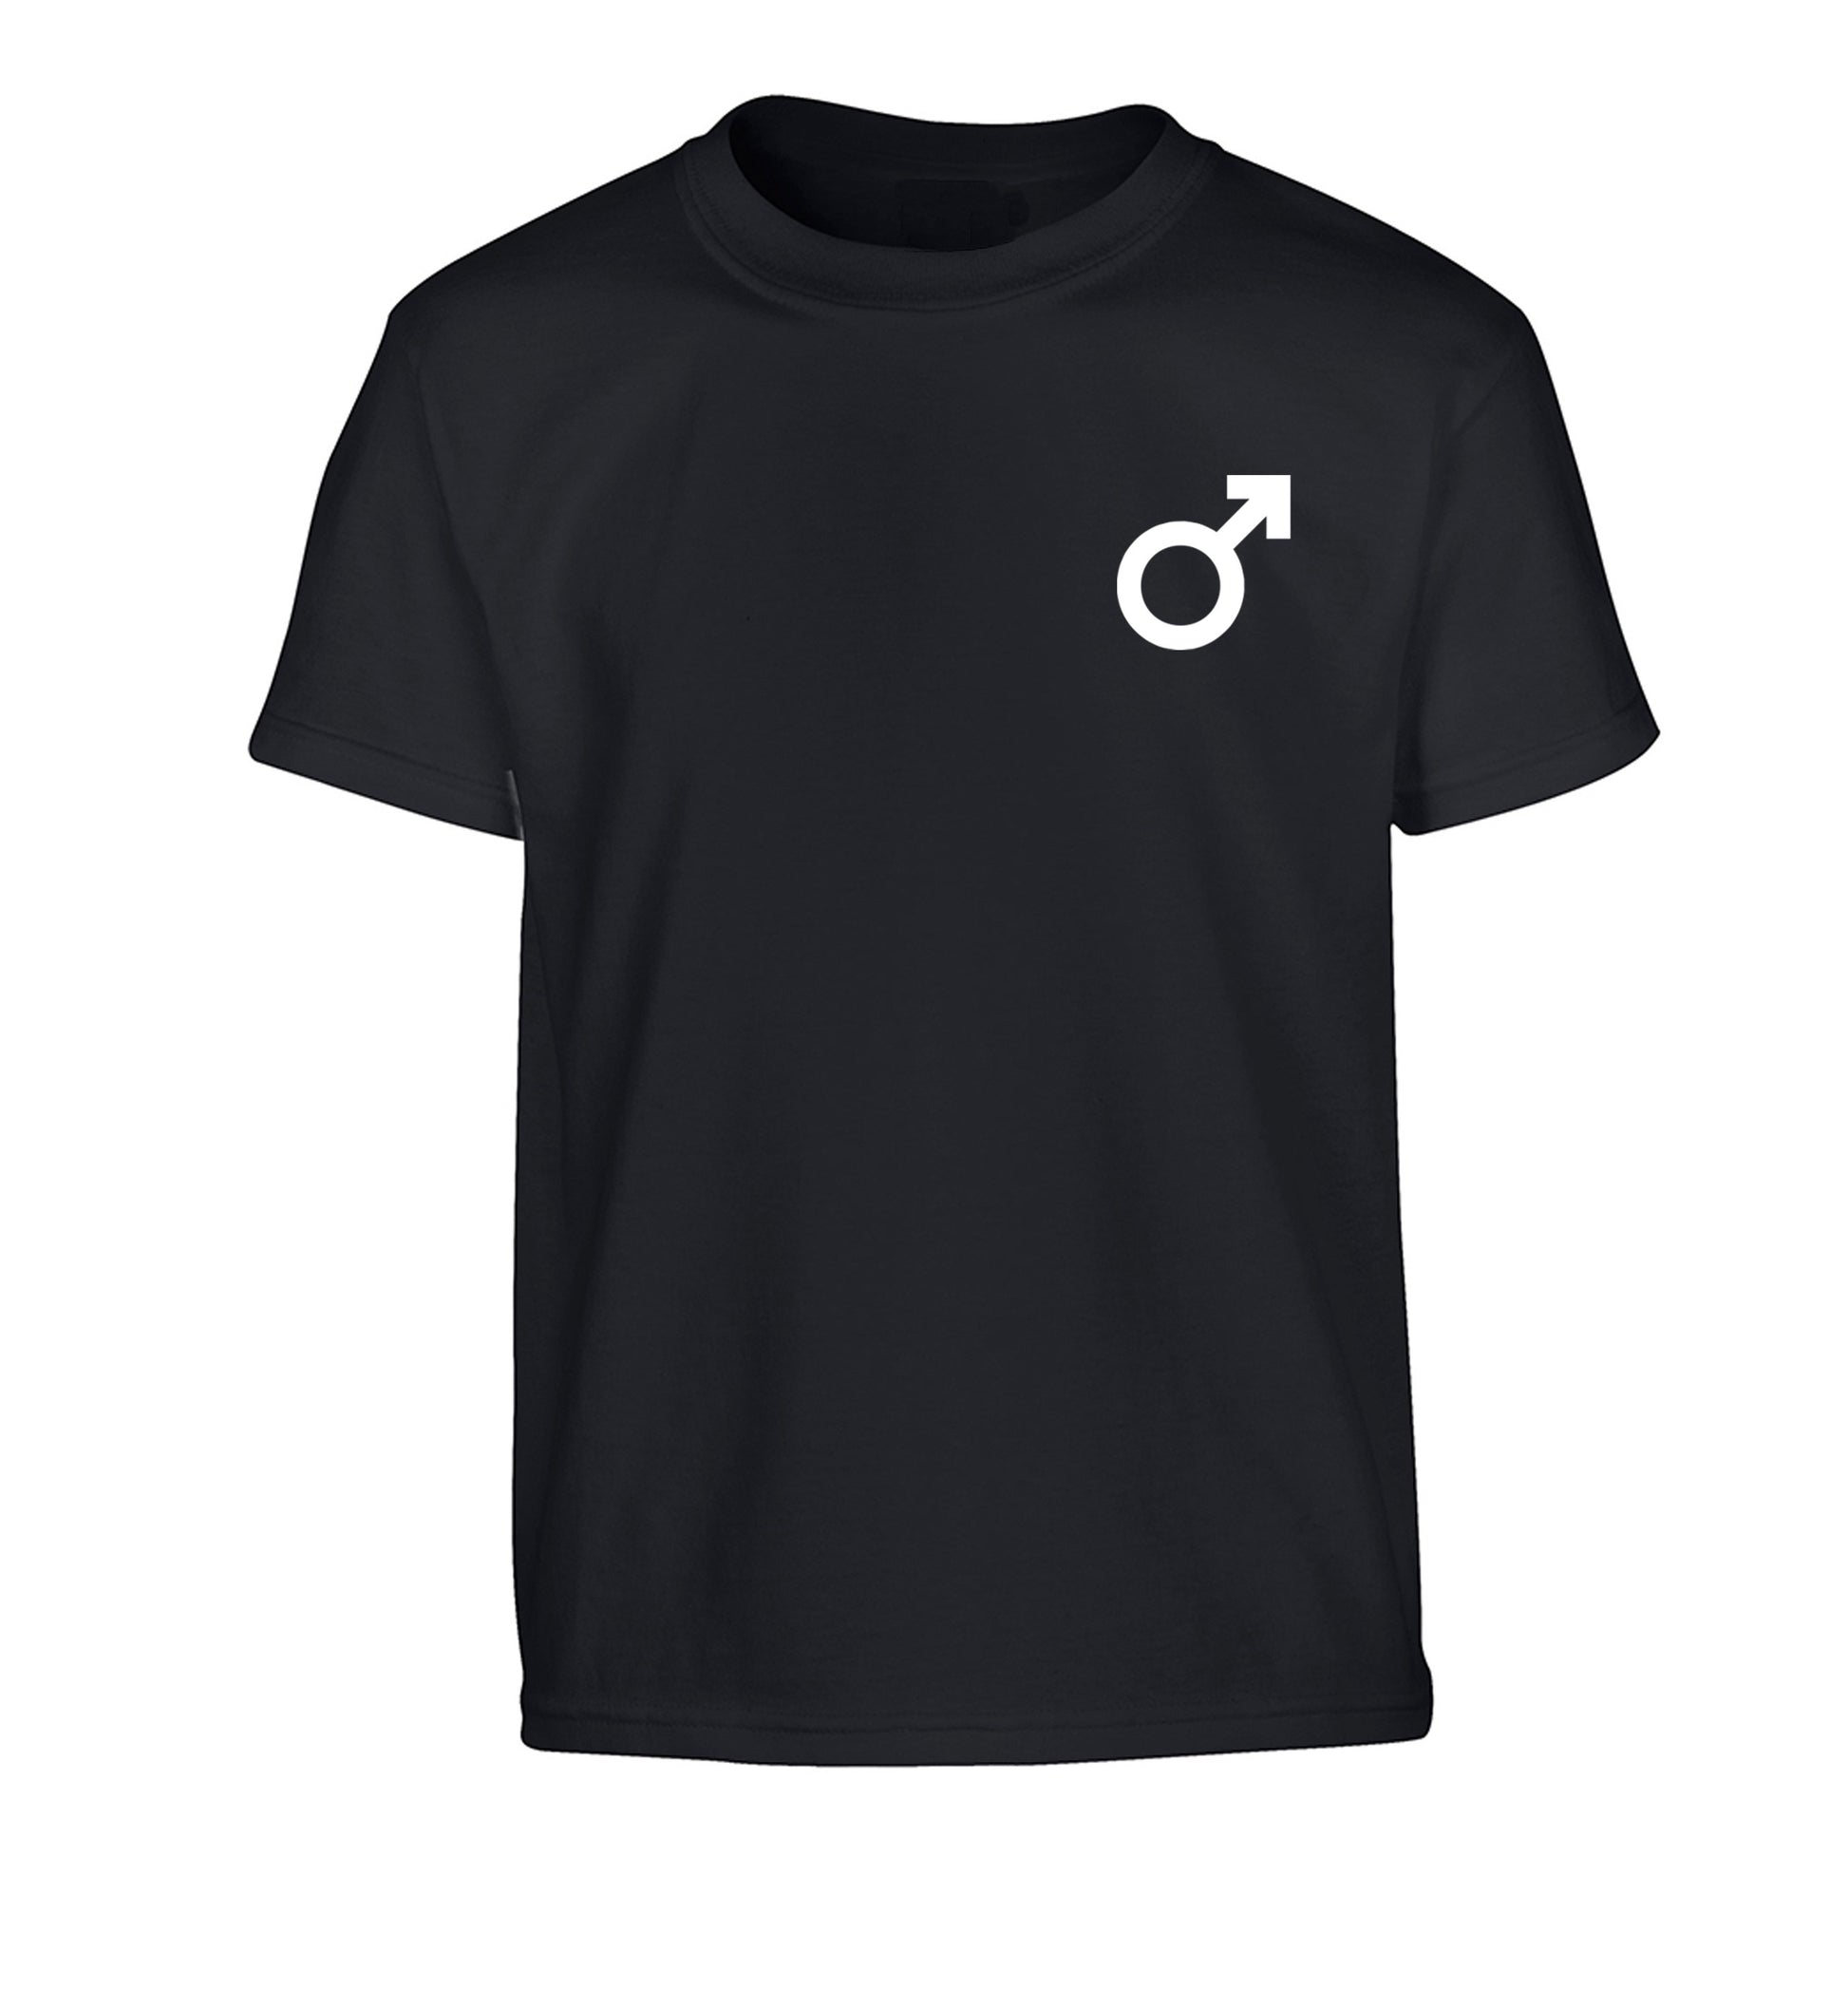 Male symbol pocket Children's black Tshirt 12-14 Years